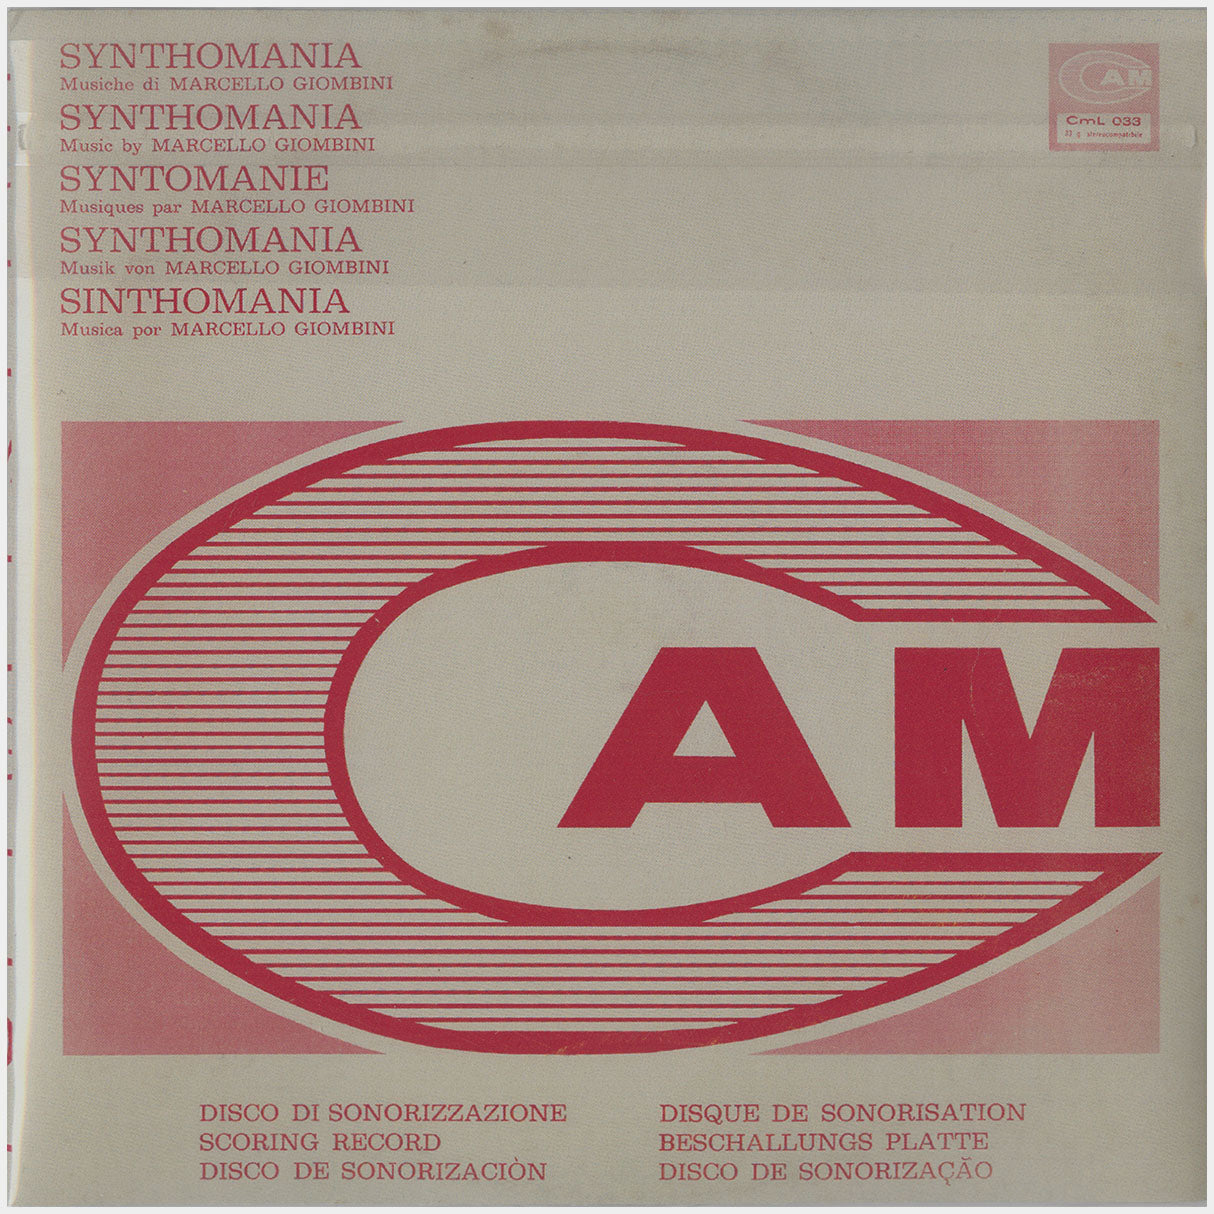 [CP 249 CD] Marcello Giombini; Overground, Synthomania